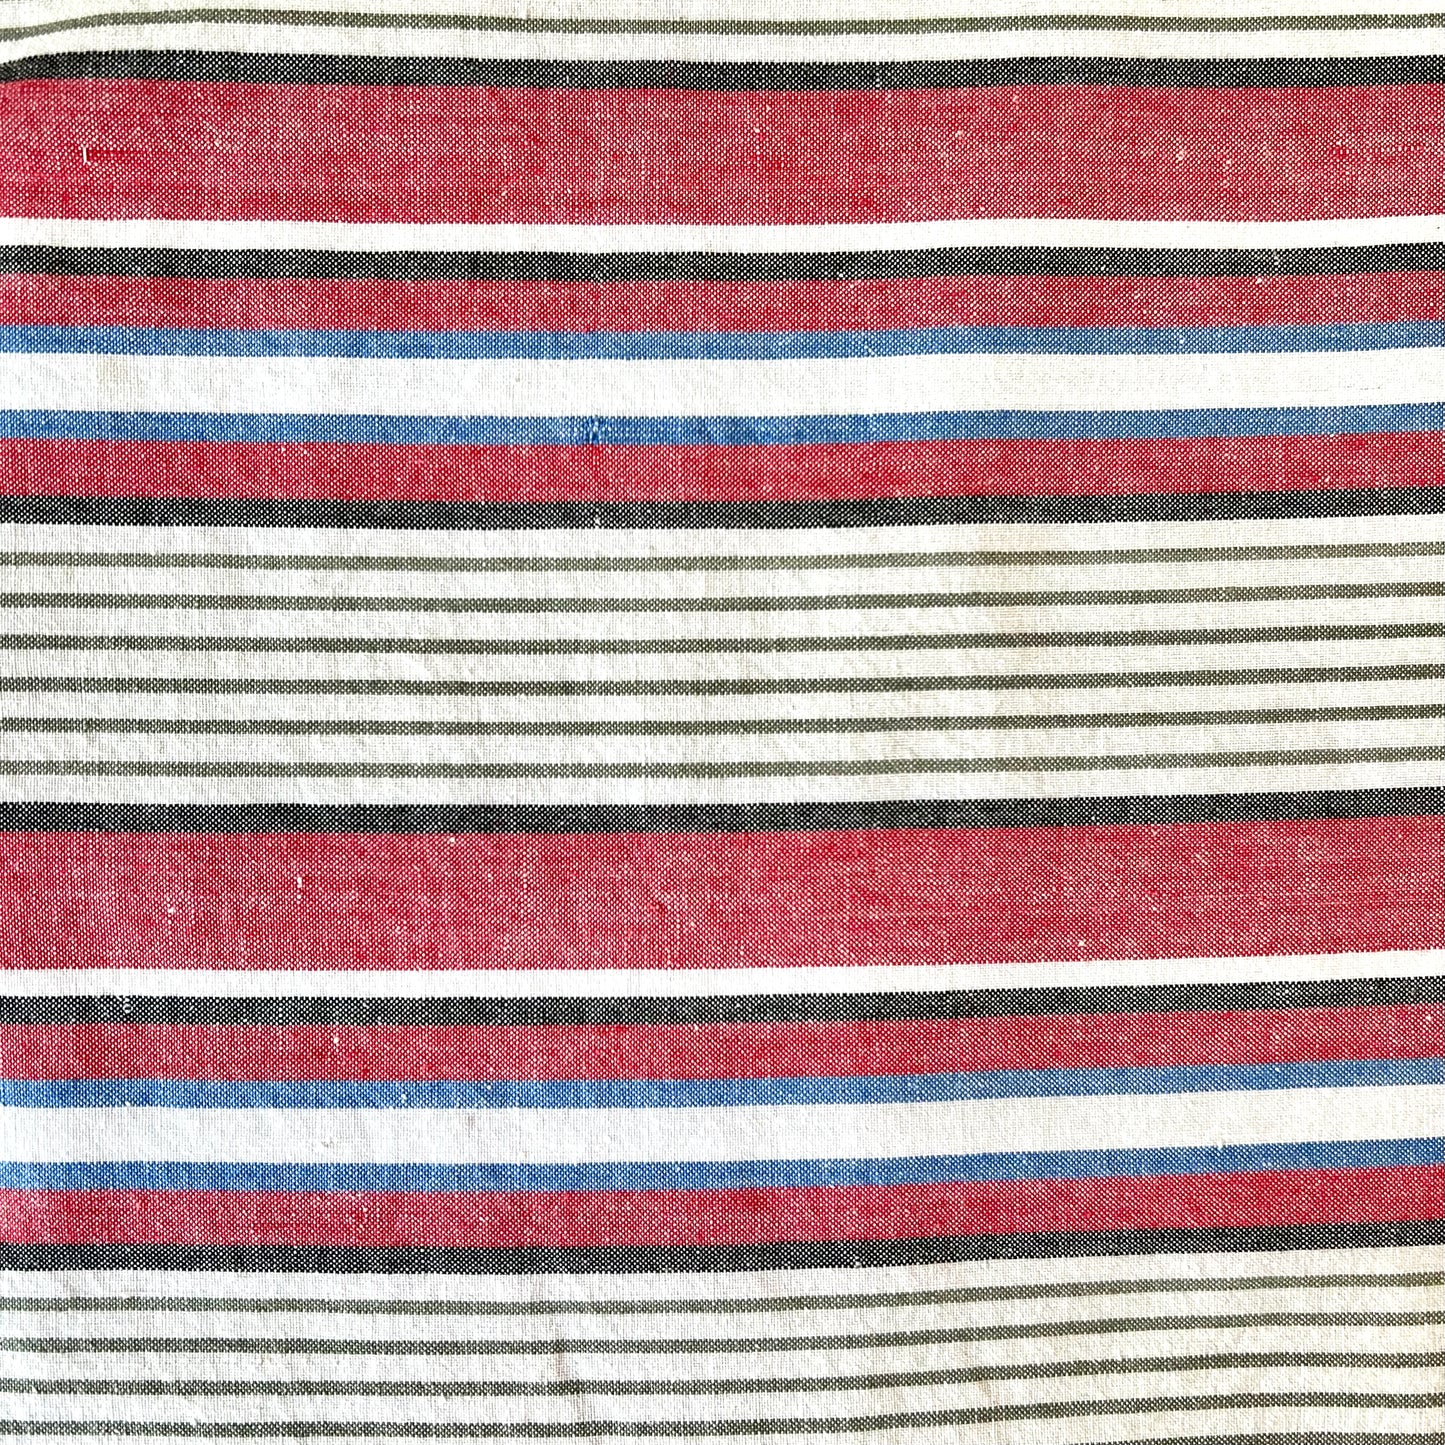 Madras Stripe Cotton Fabric